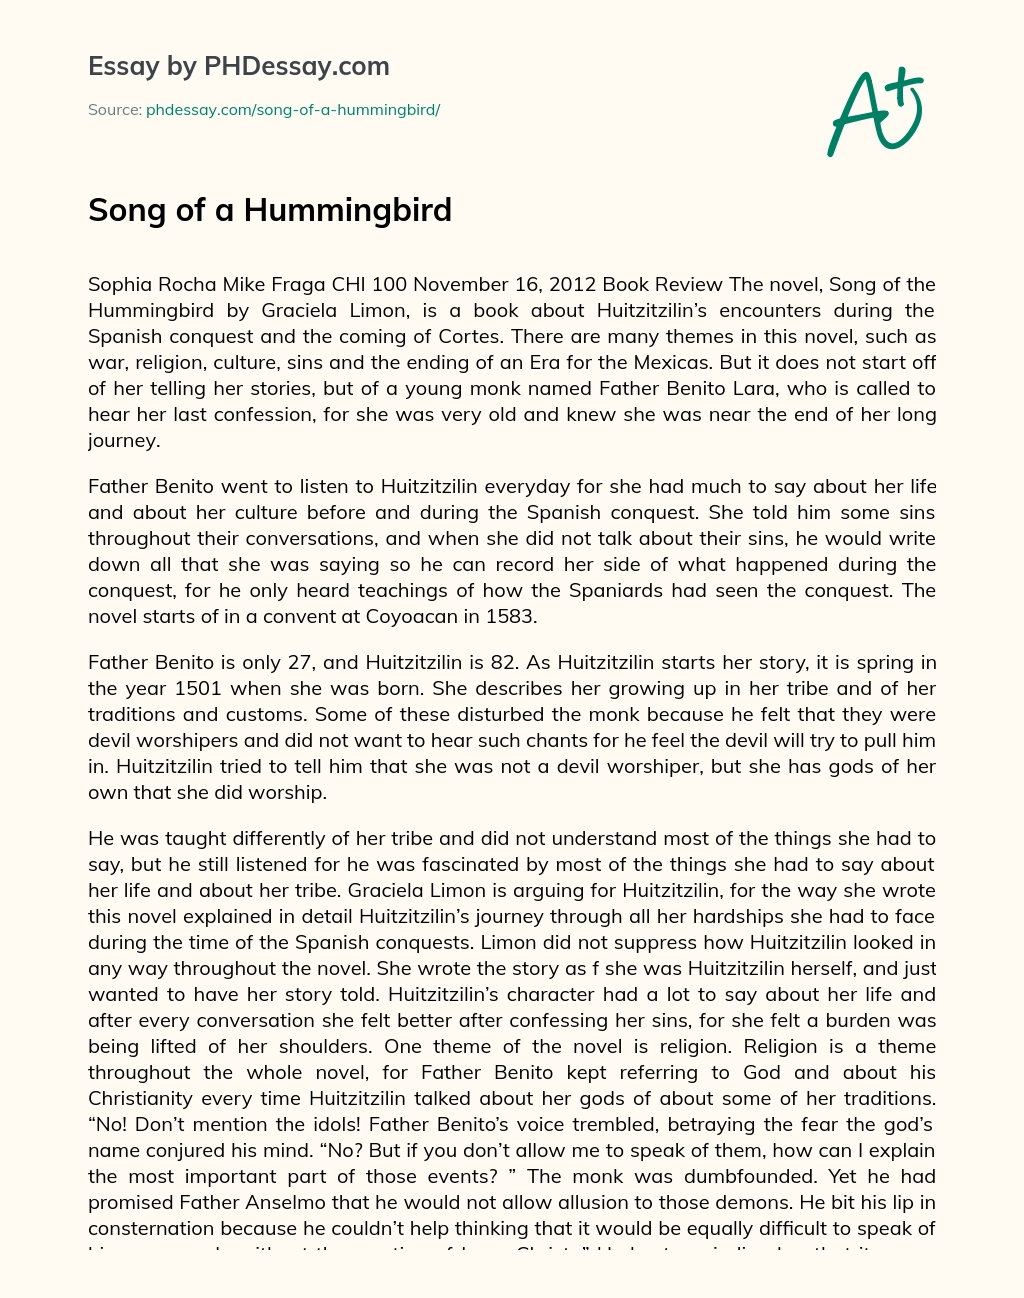 Song of a Hummingbird essay